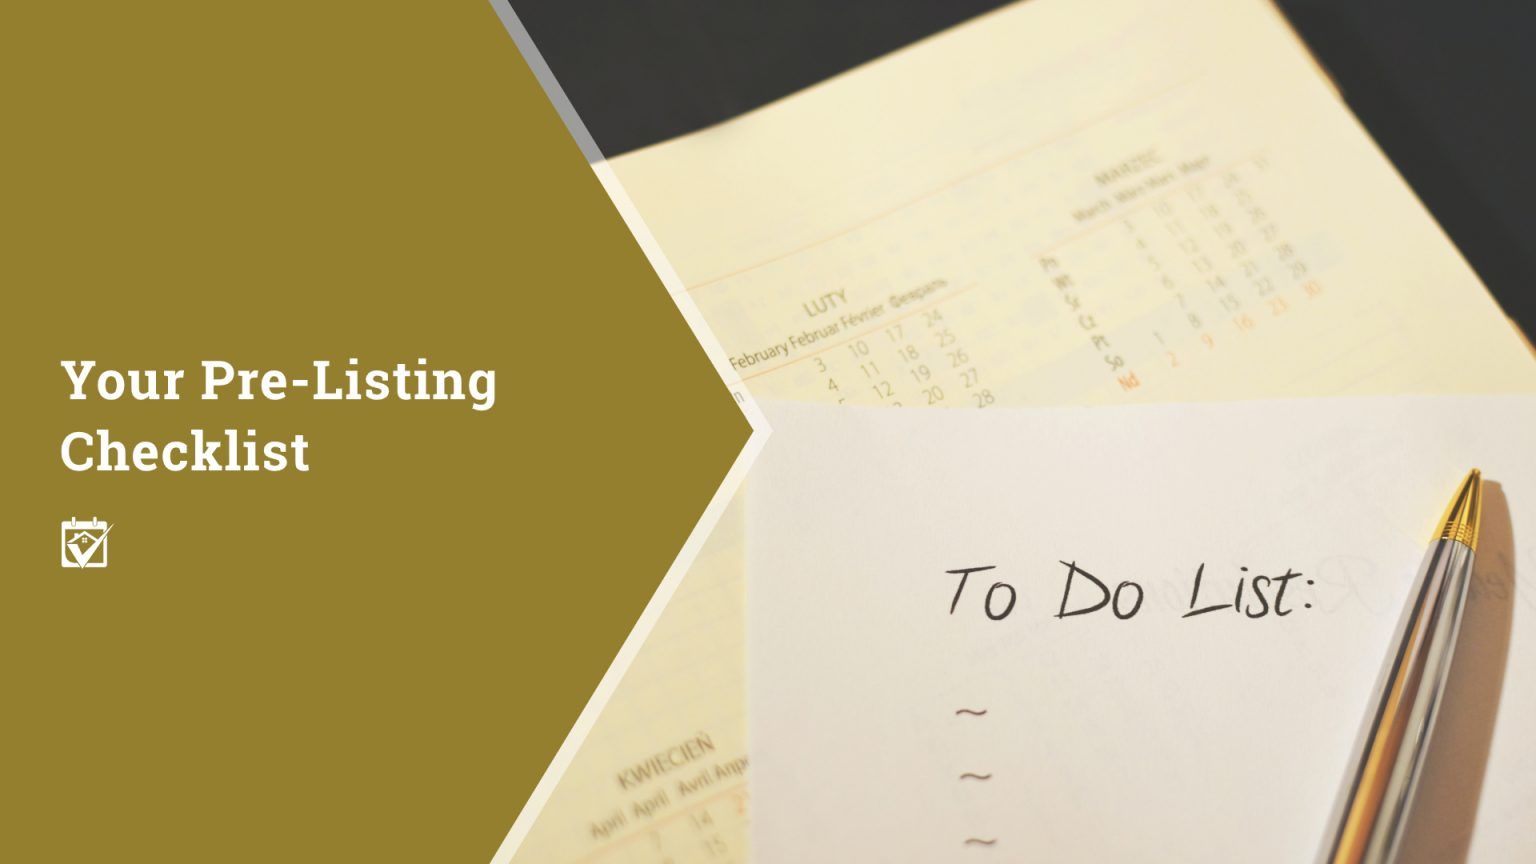 Your Pre-Listing Checklist